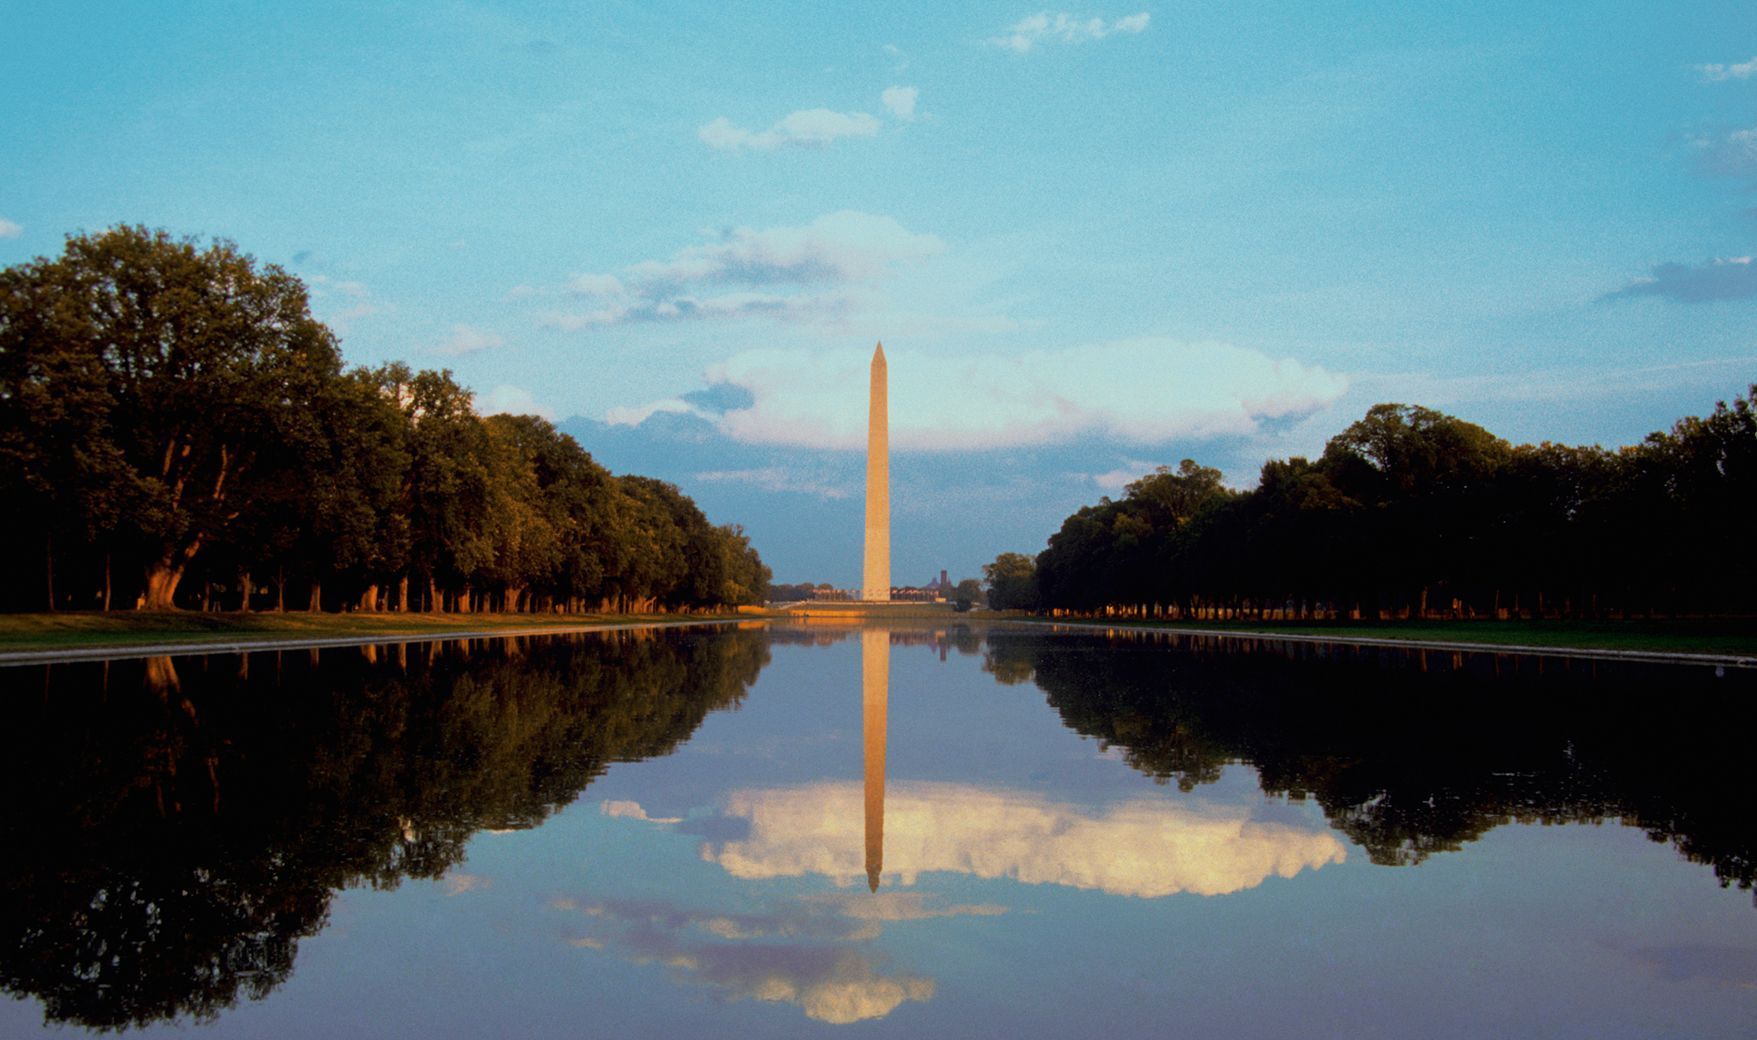 Washington Monument looking across reflective pond